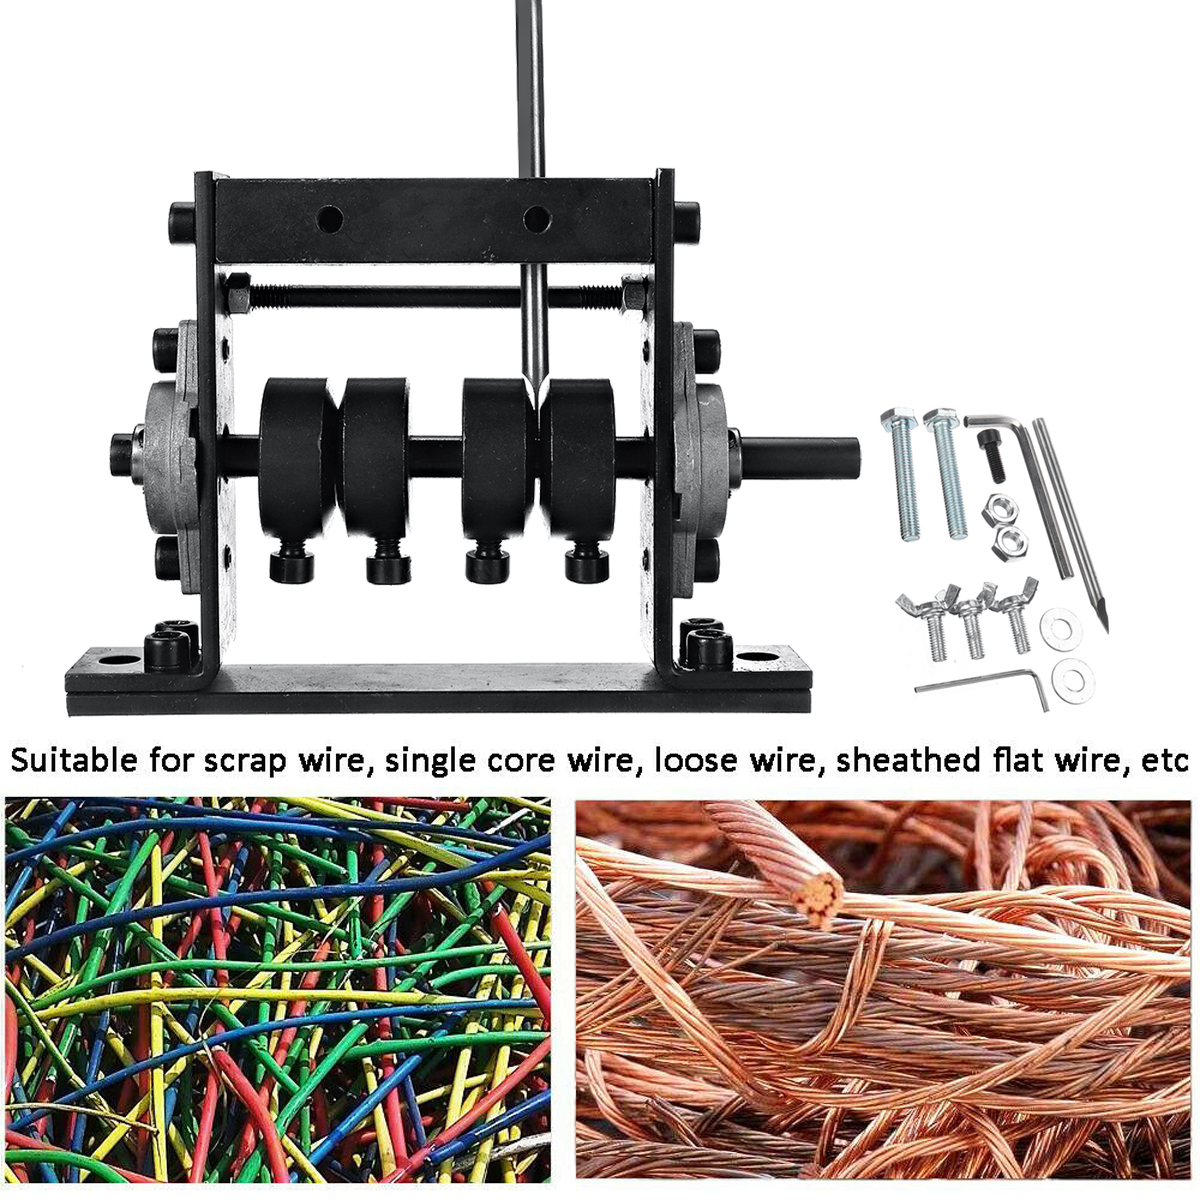 1-30mm Manual Copper Wire Stripping Machine Scrap Cable Peeling Stripper Fixture